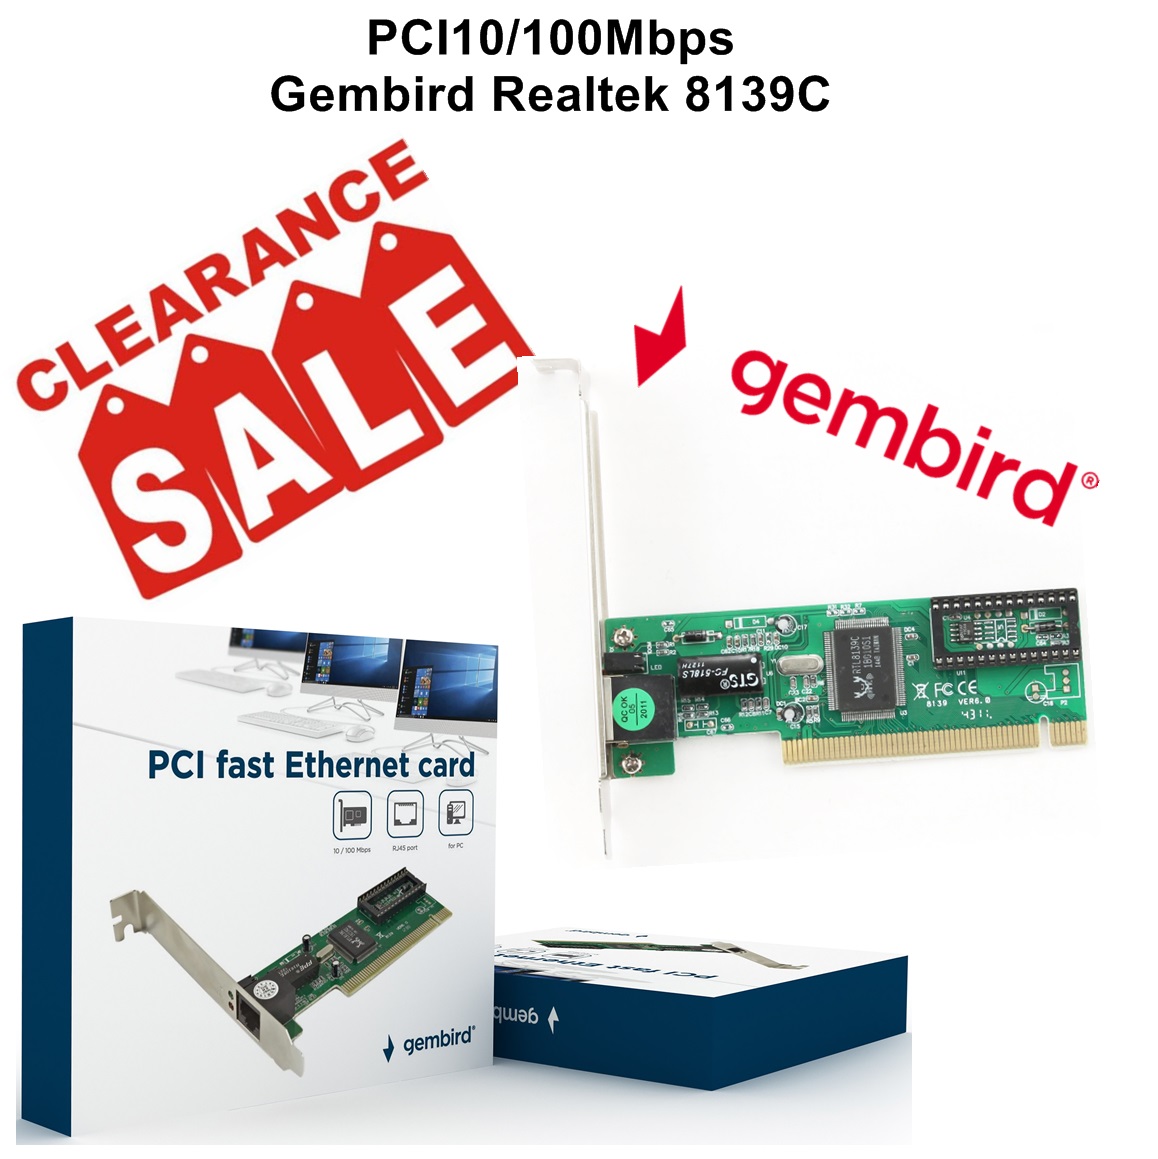 PCI10/100Mbps Gembird Realtek 8139C